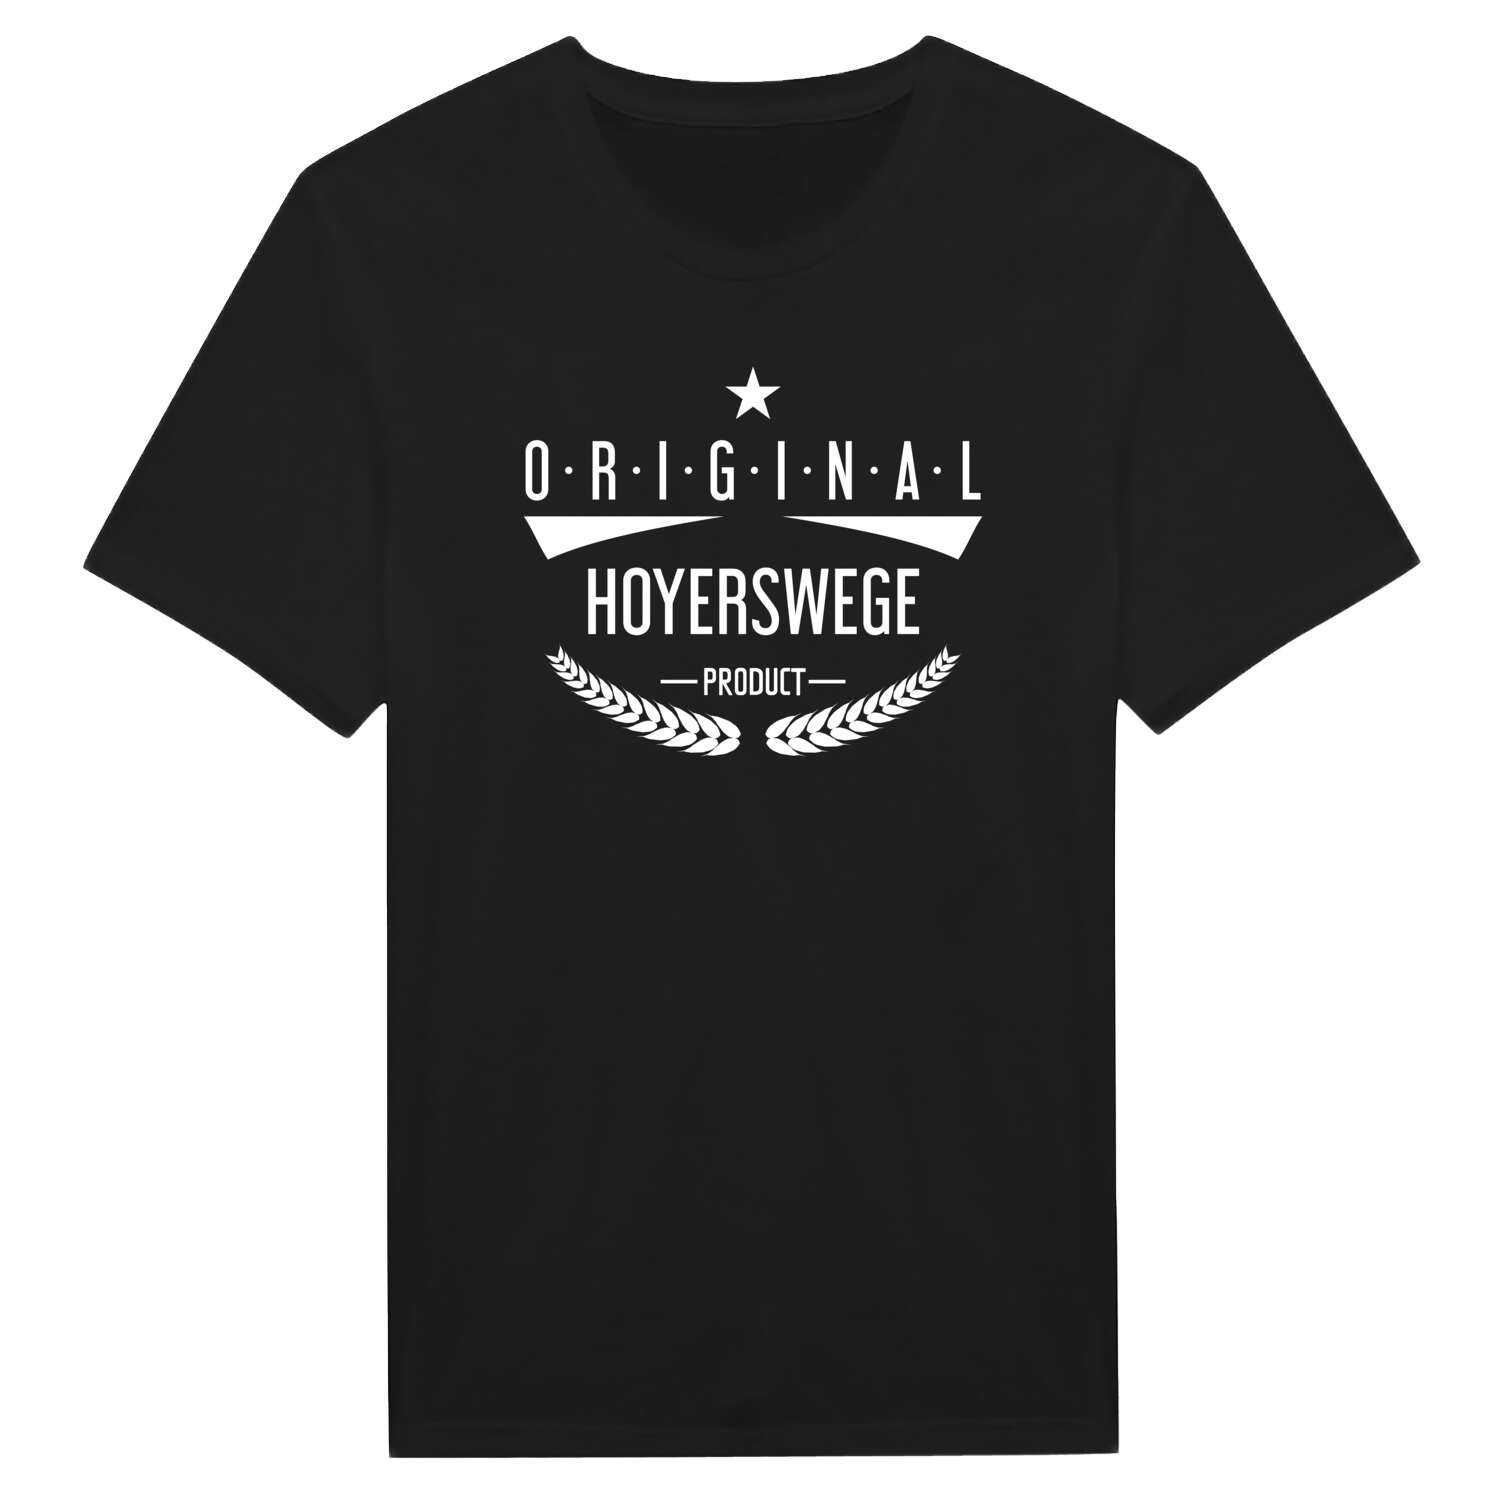 Hoyerswege T-Shirt »Original Product«